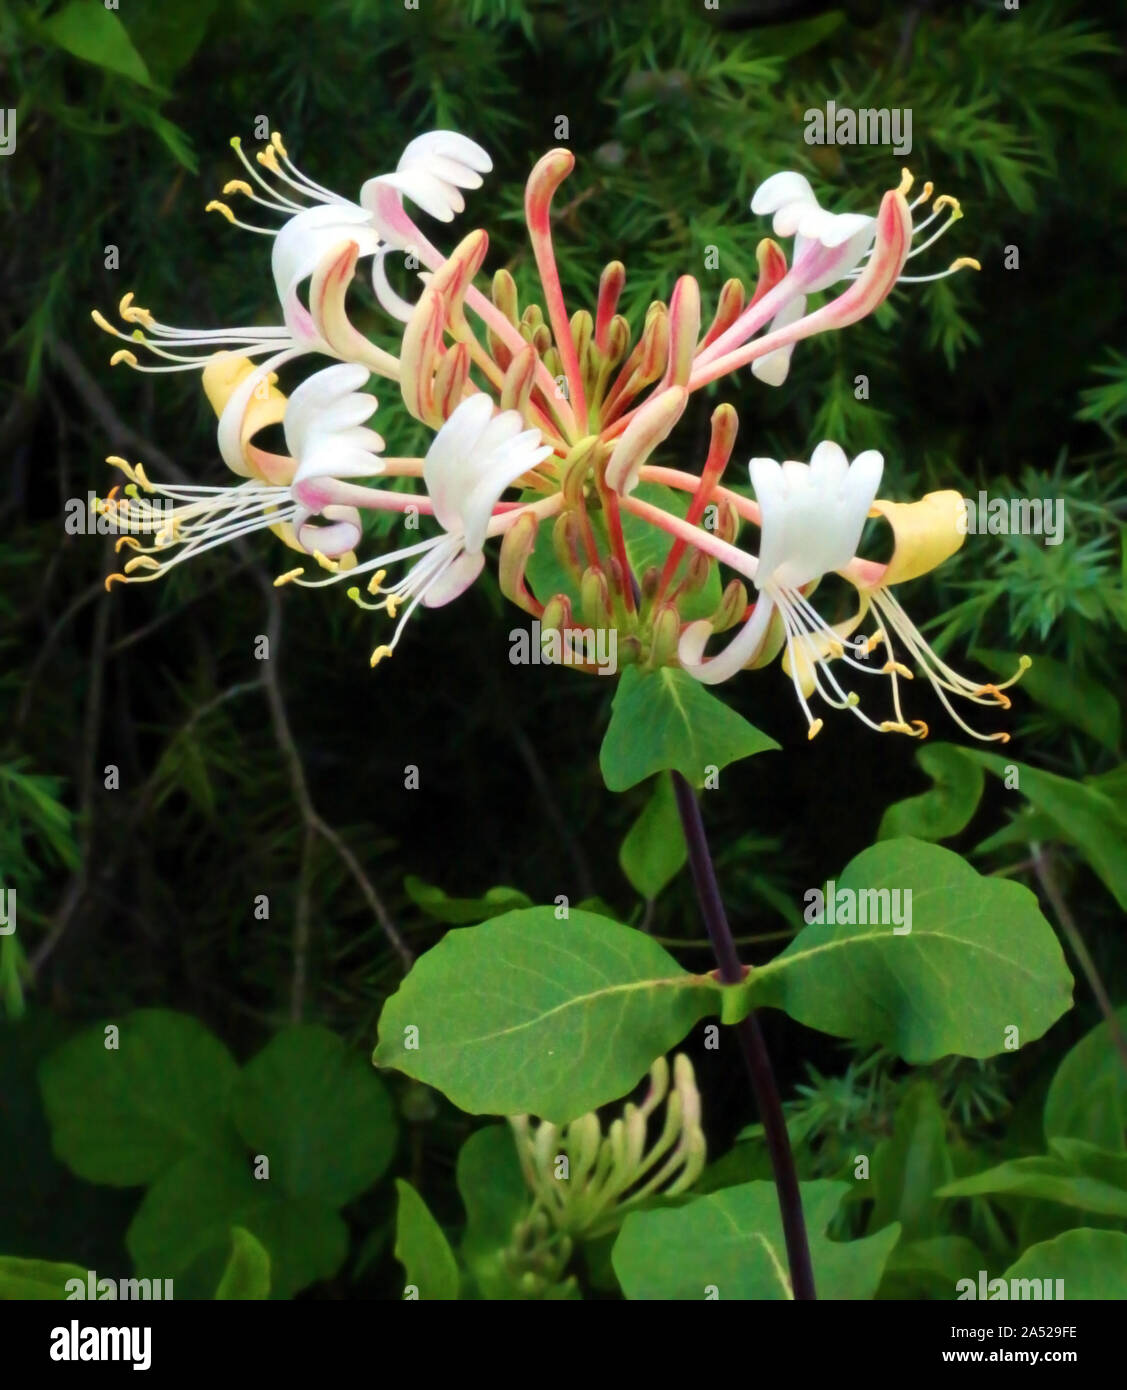 Delicate honeysuckle flower on a dark background. Stock Photo